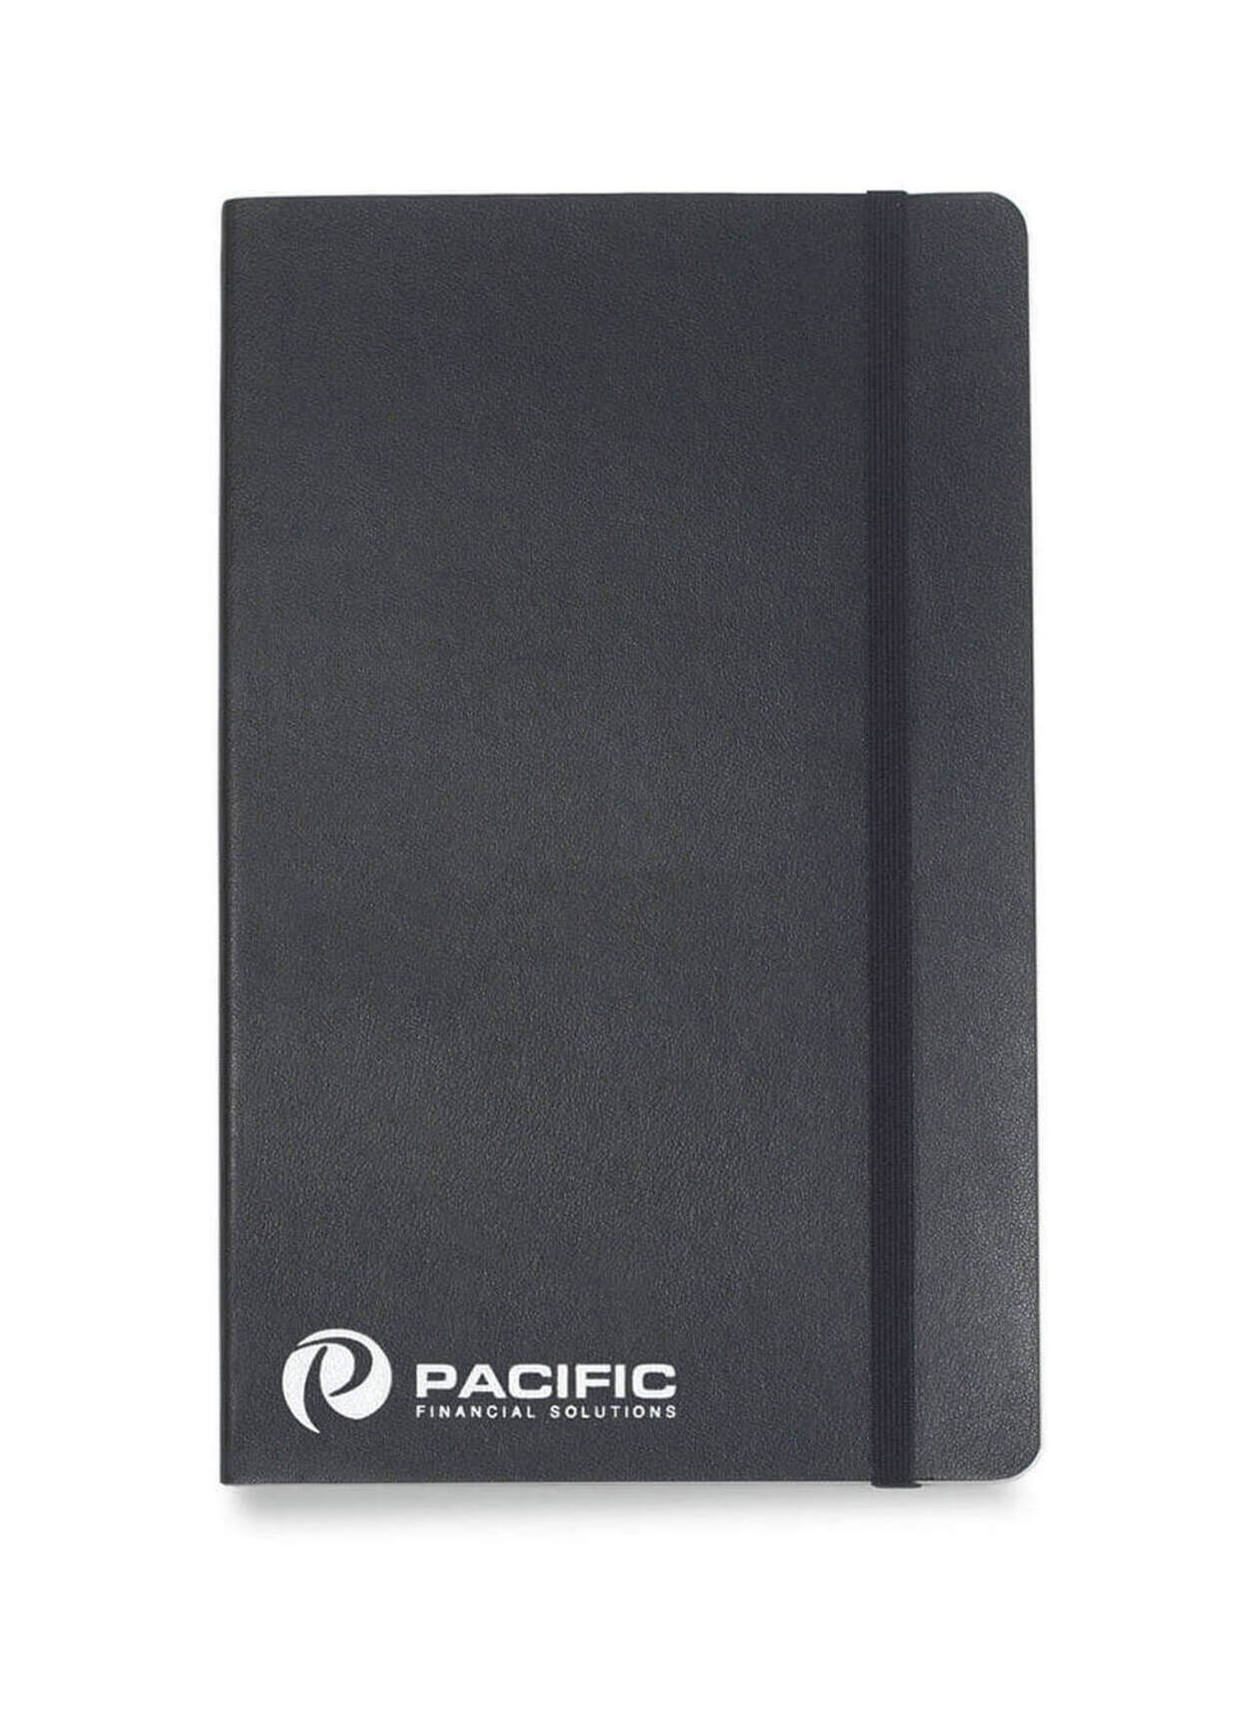 Moleskine Black Soft Cover Ruled Large Notebook